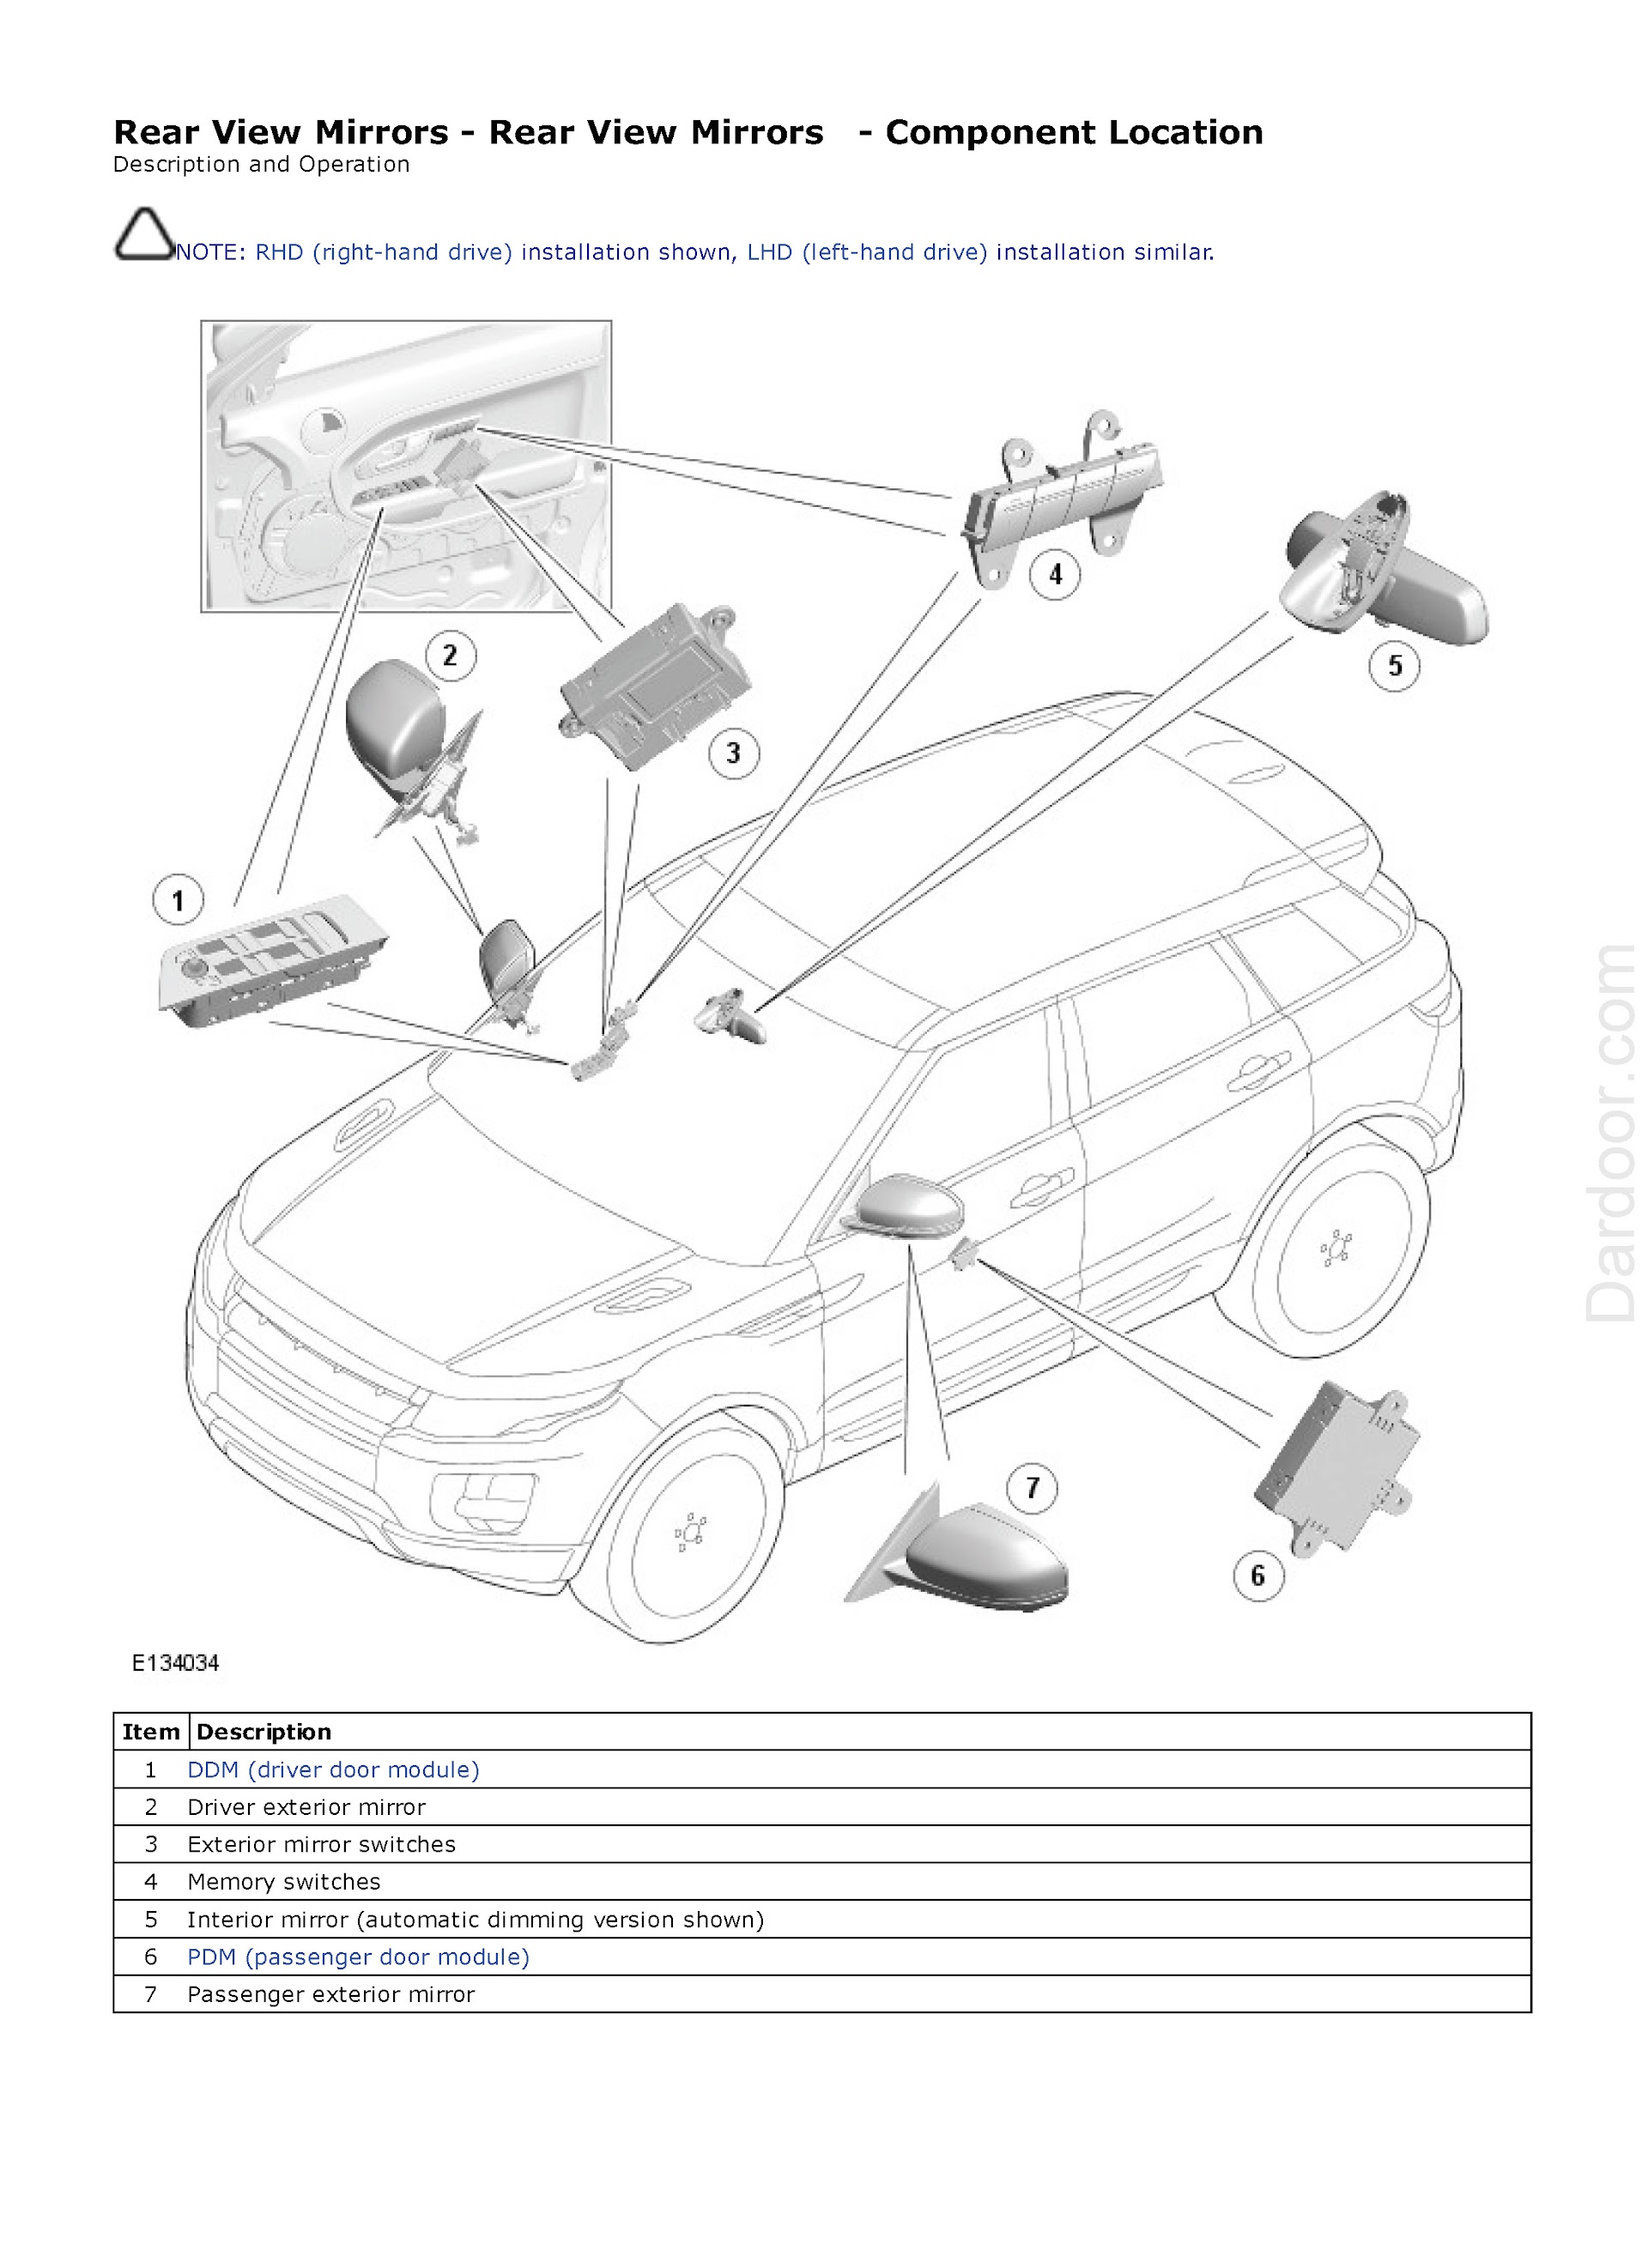 Download 2013 Range Rover Evoque Service Repair Manual.